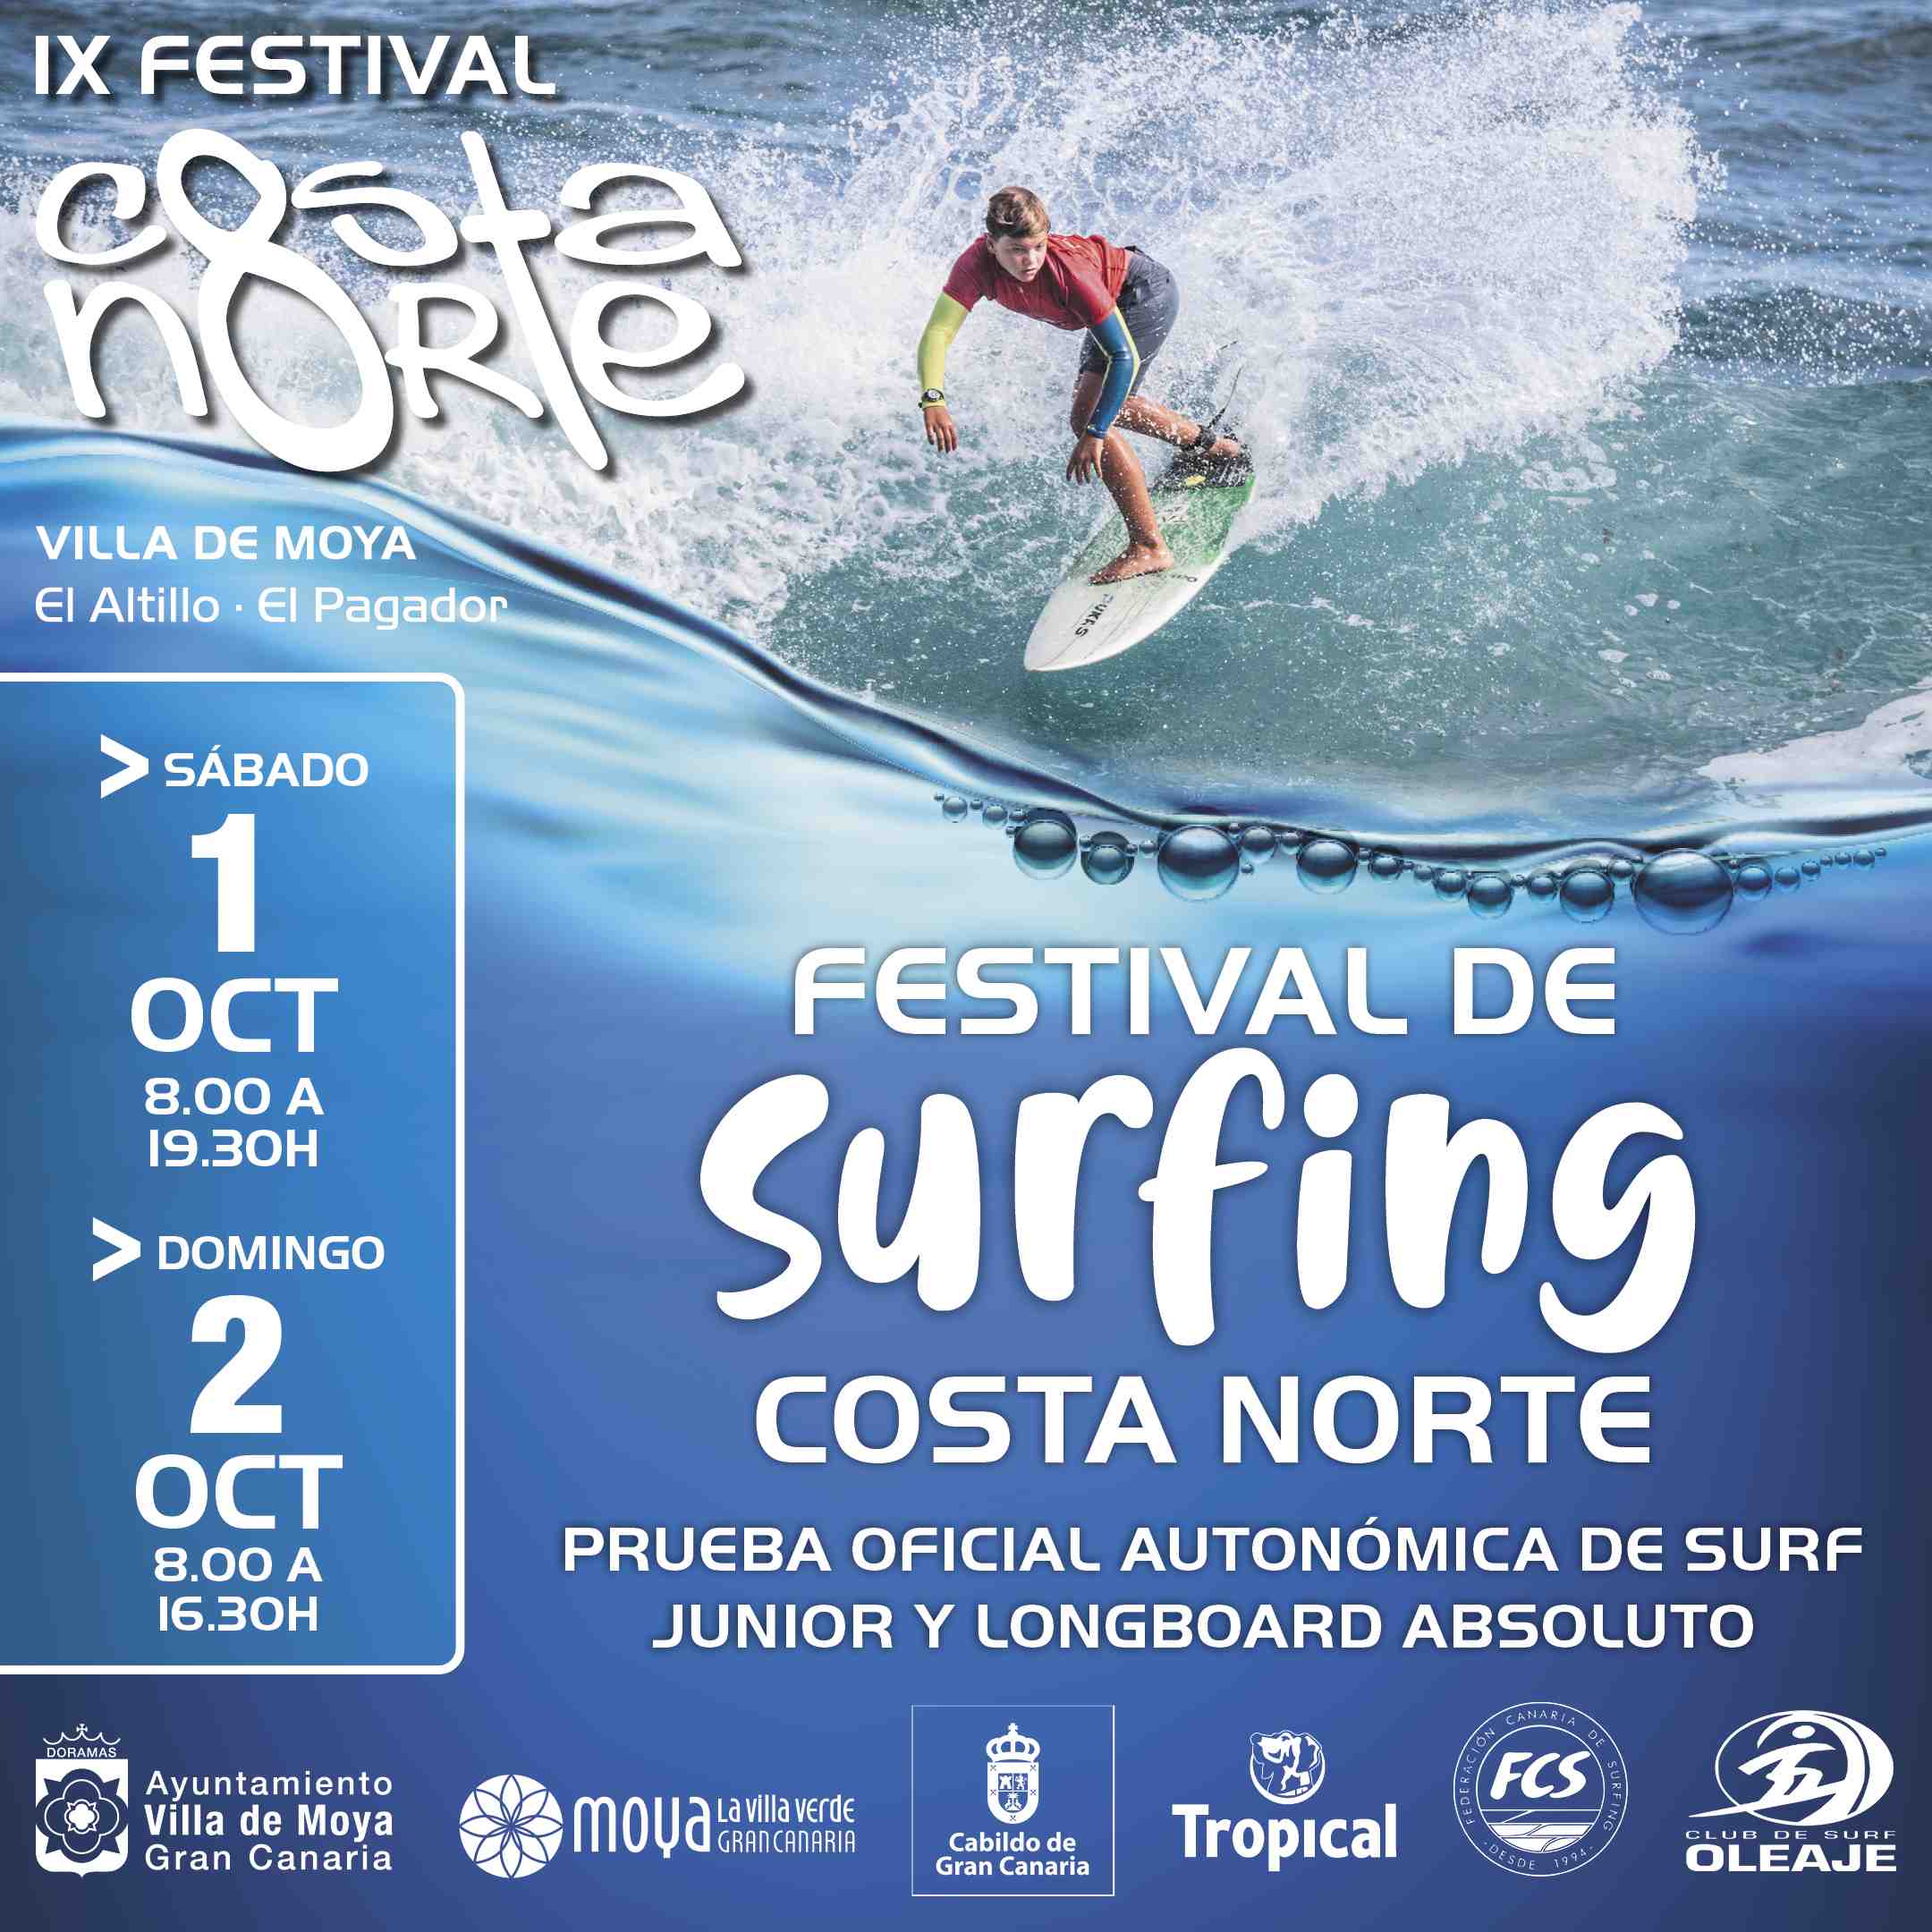 FESTIVAL DE SURFING COSTA NORTE 2022 - Register